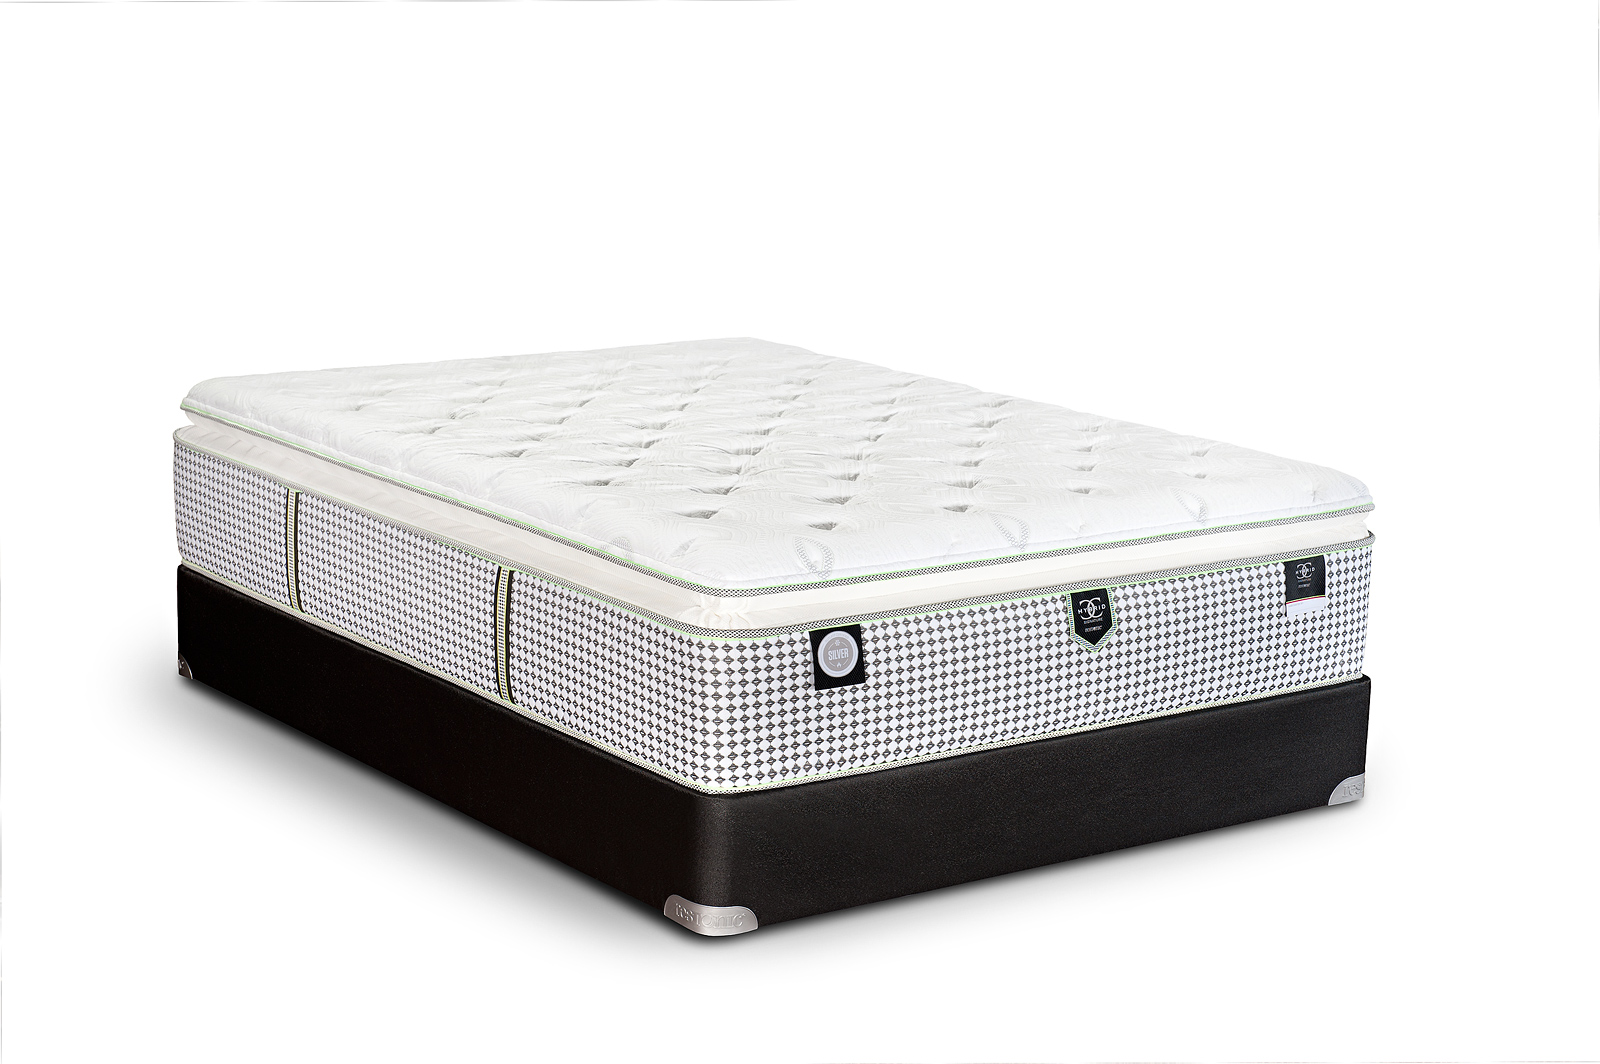 Restonic Hybrid Mattress is the best mattress for heavyset sleepers.